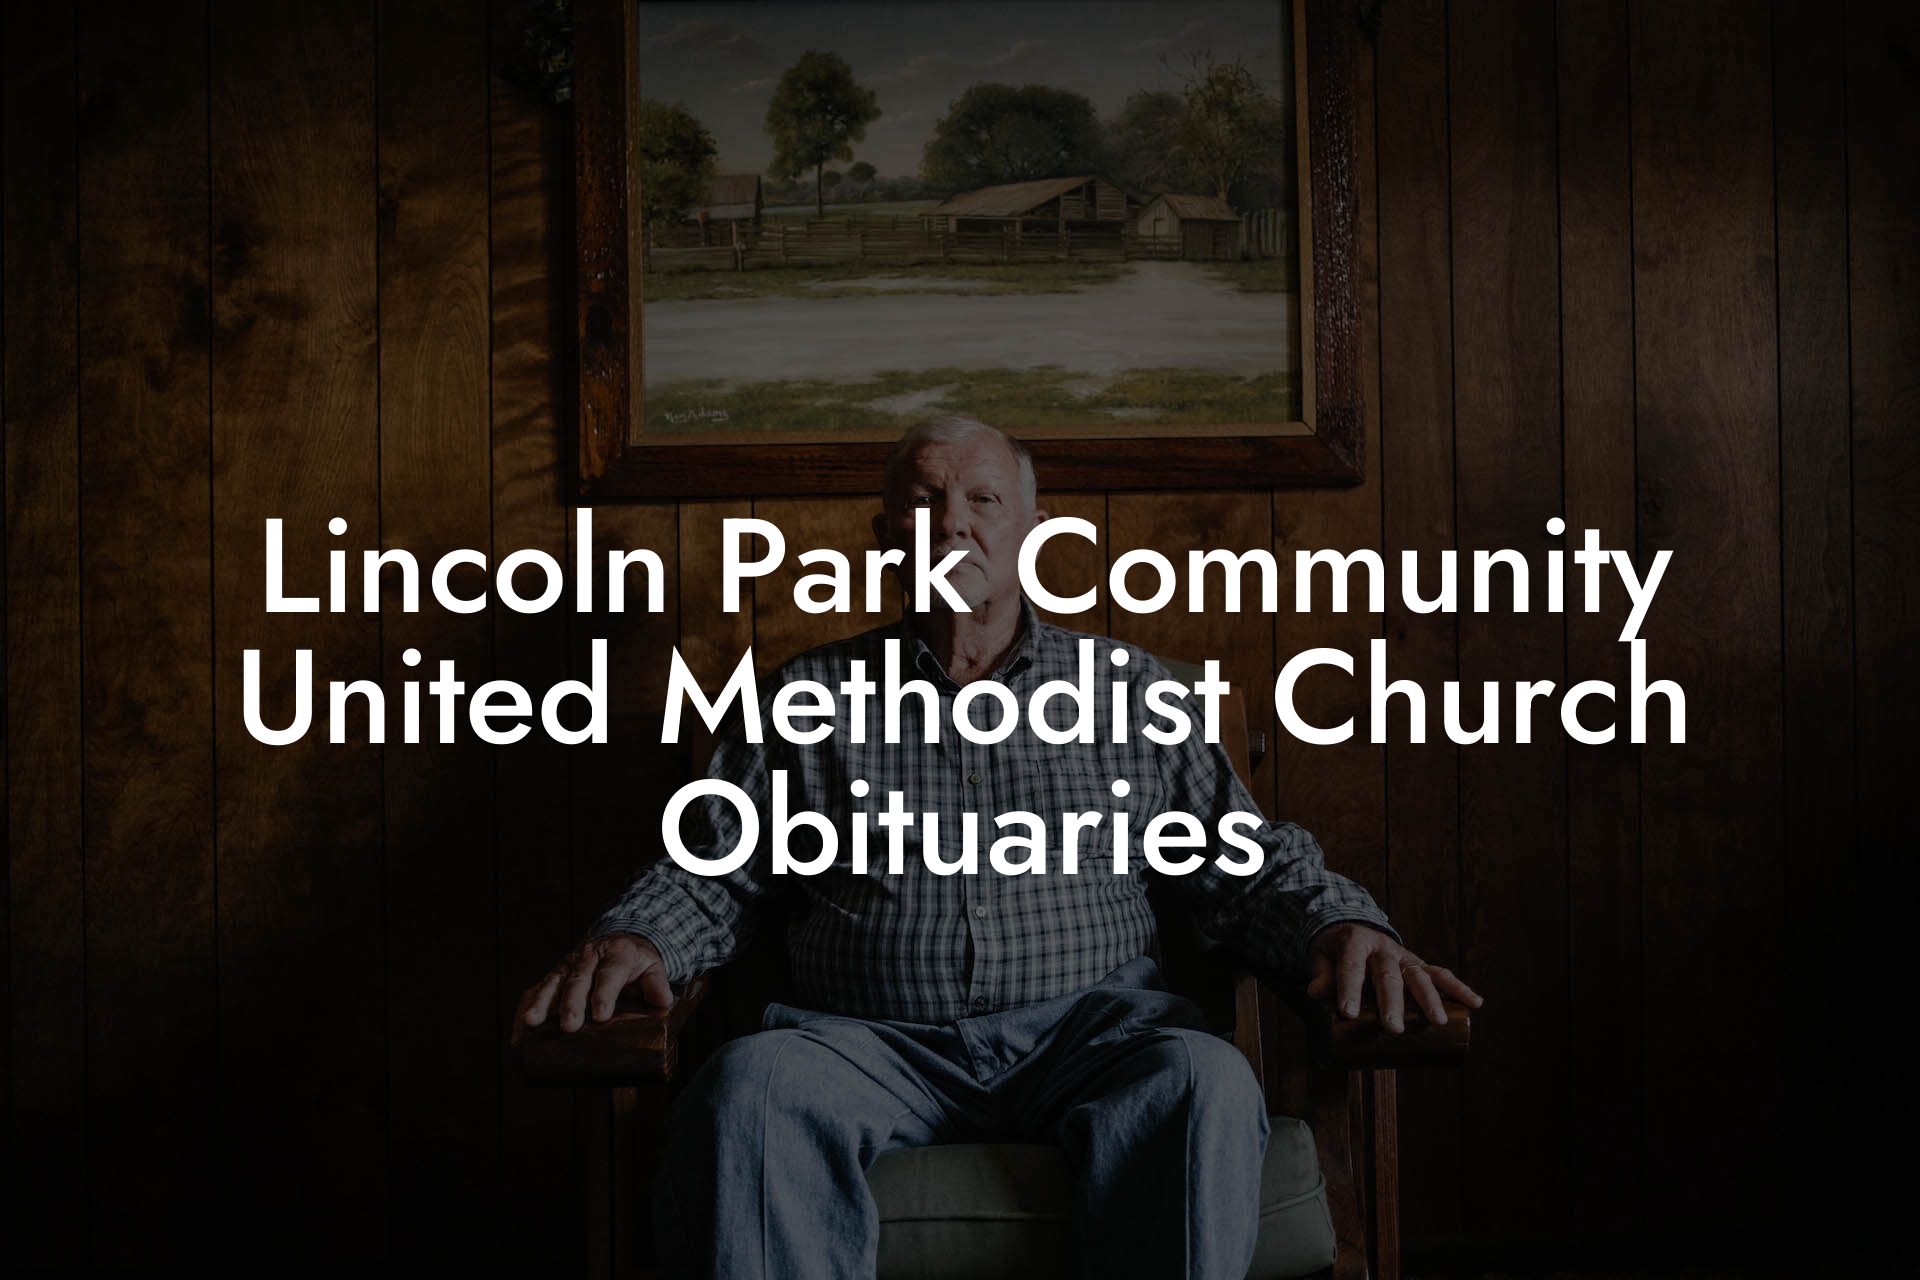 Lincoln Park Community United Methodist Church Obituaries